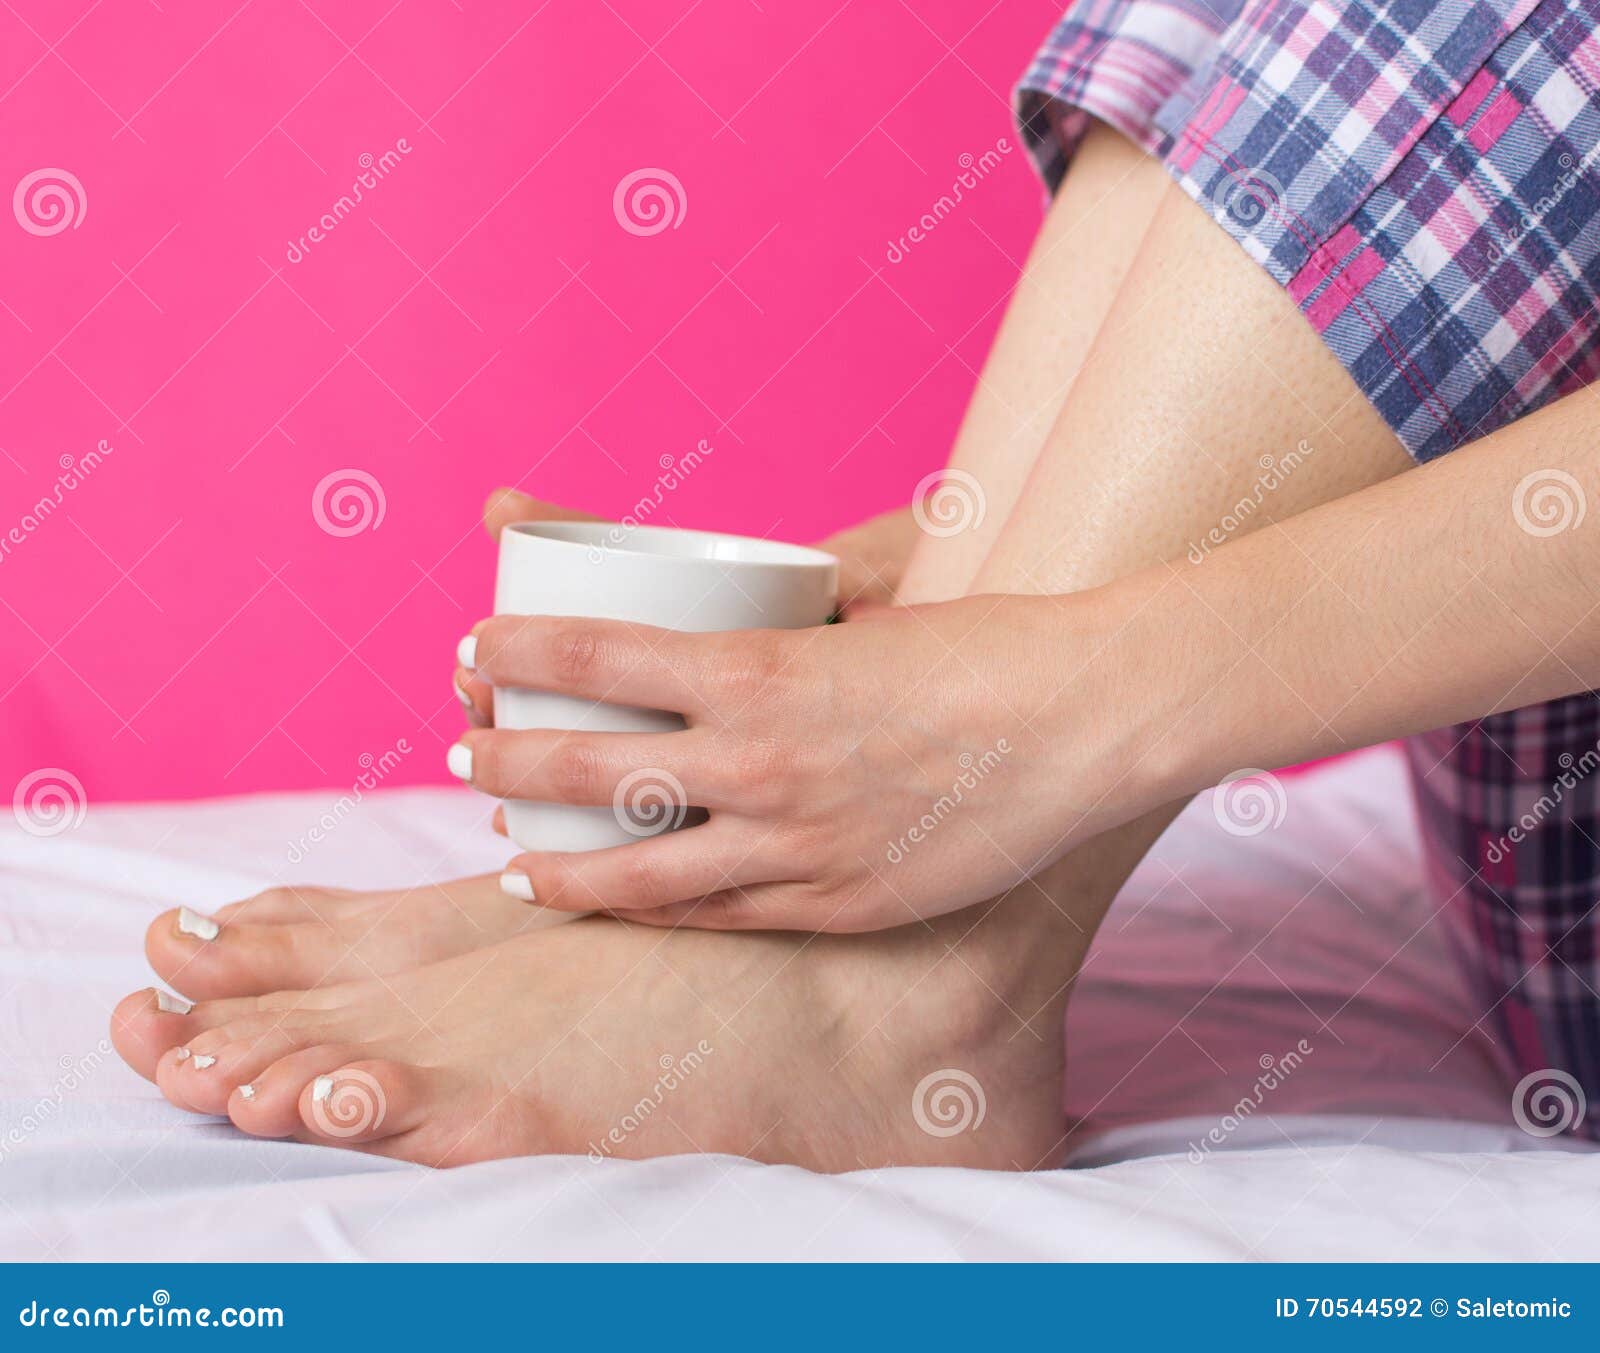 woman in pijama having cup of coffee